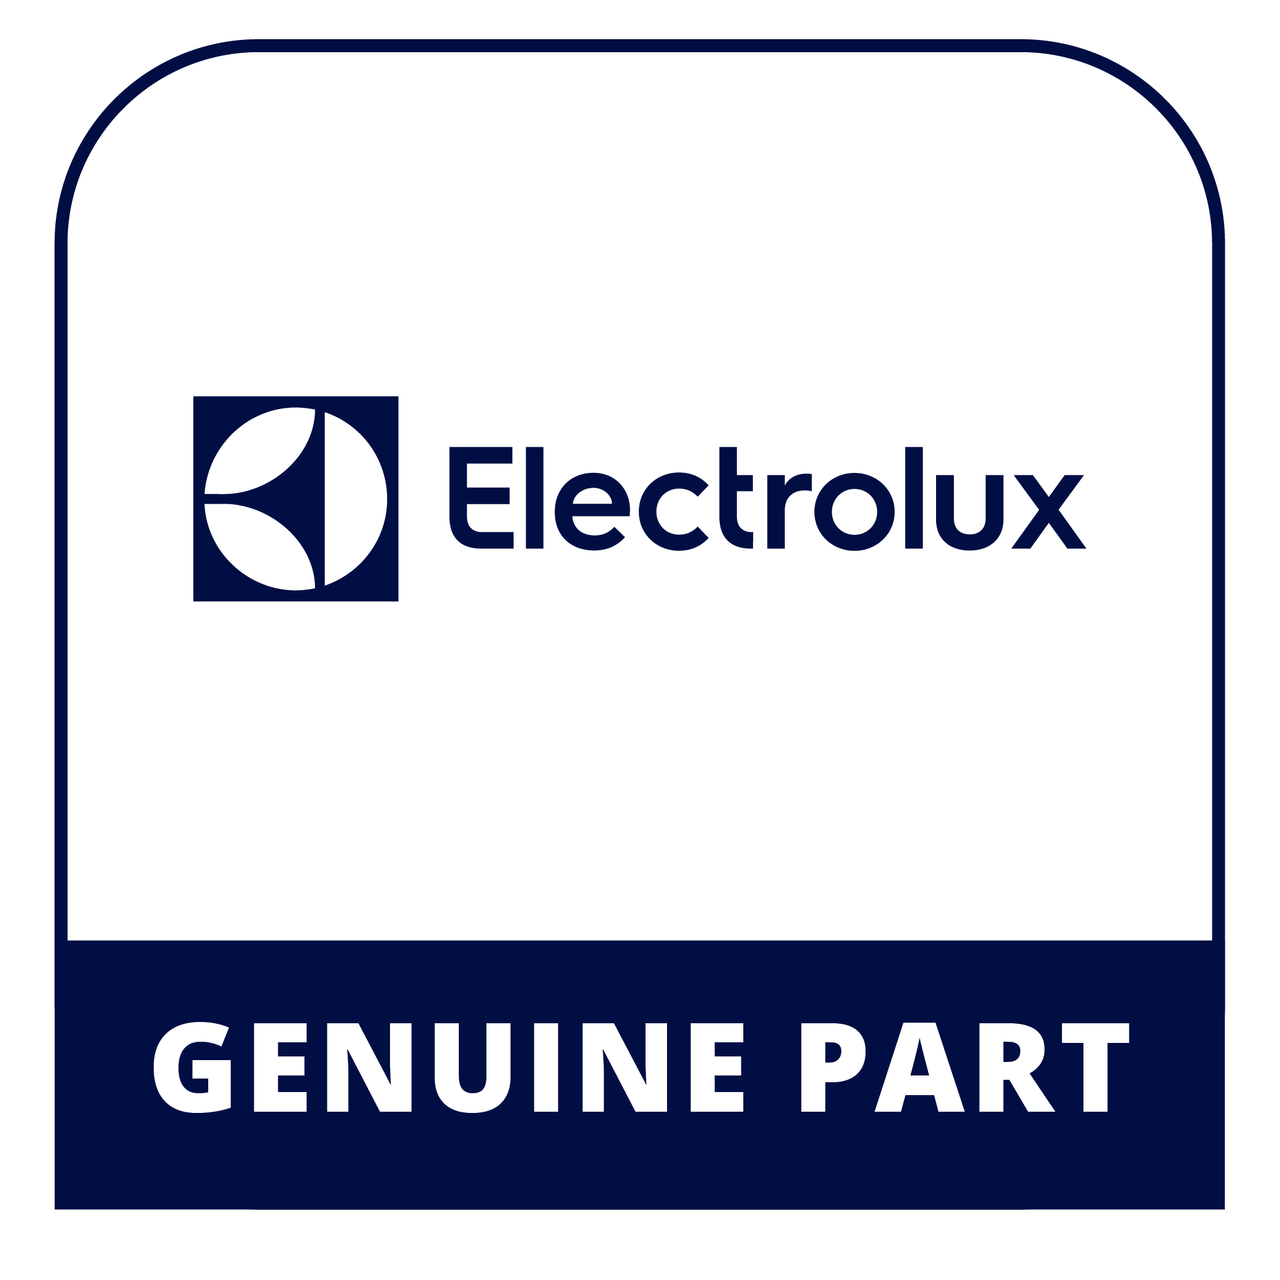 Frigidaire - Electrolux 218903704 Label-Module Cover - Genuine Electrolux Part